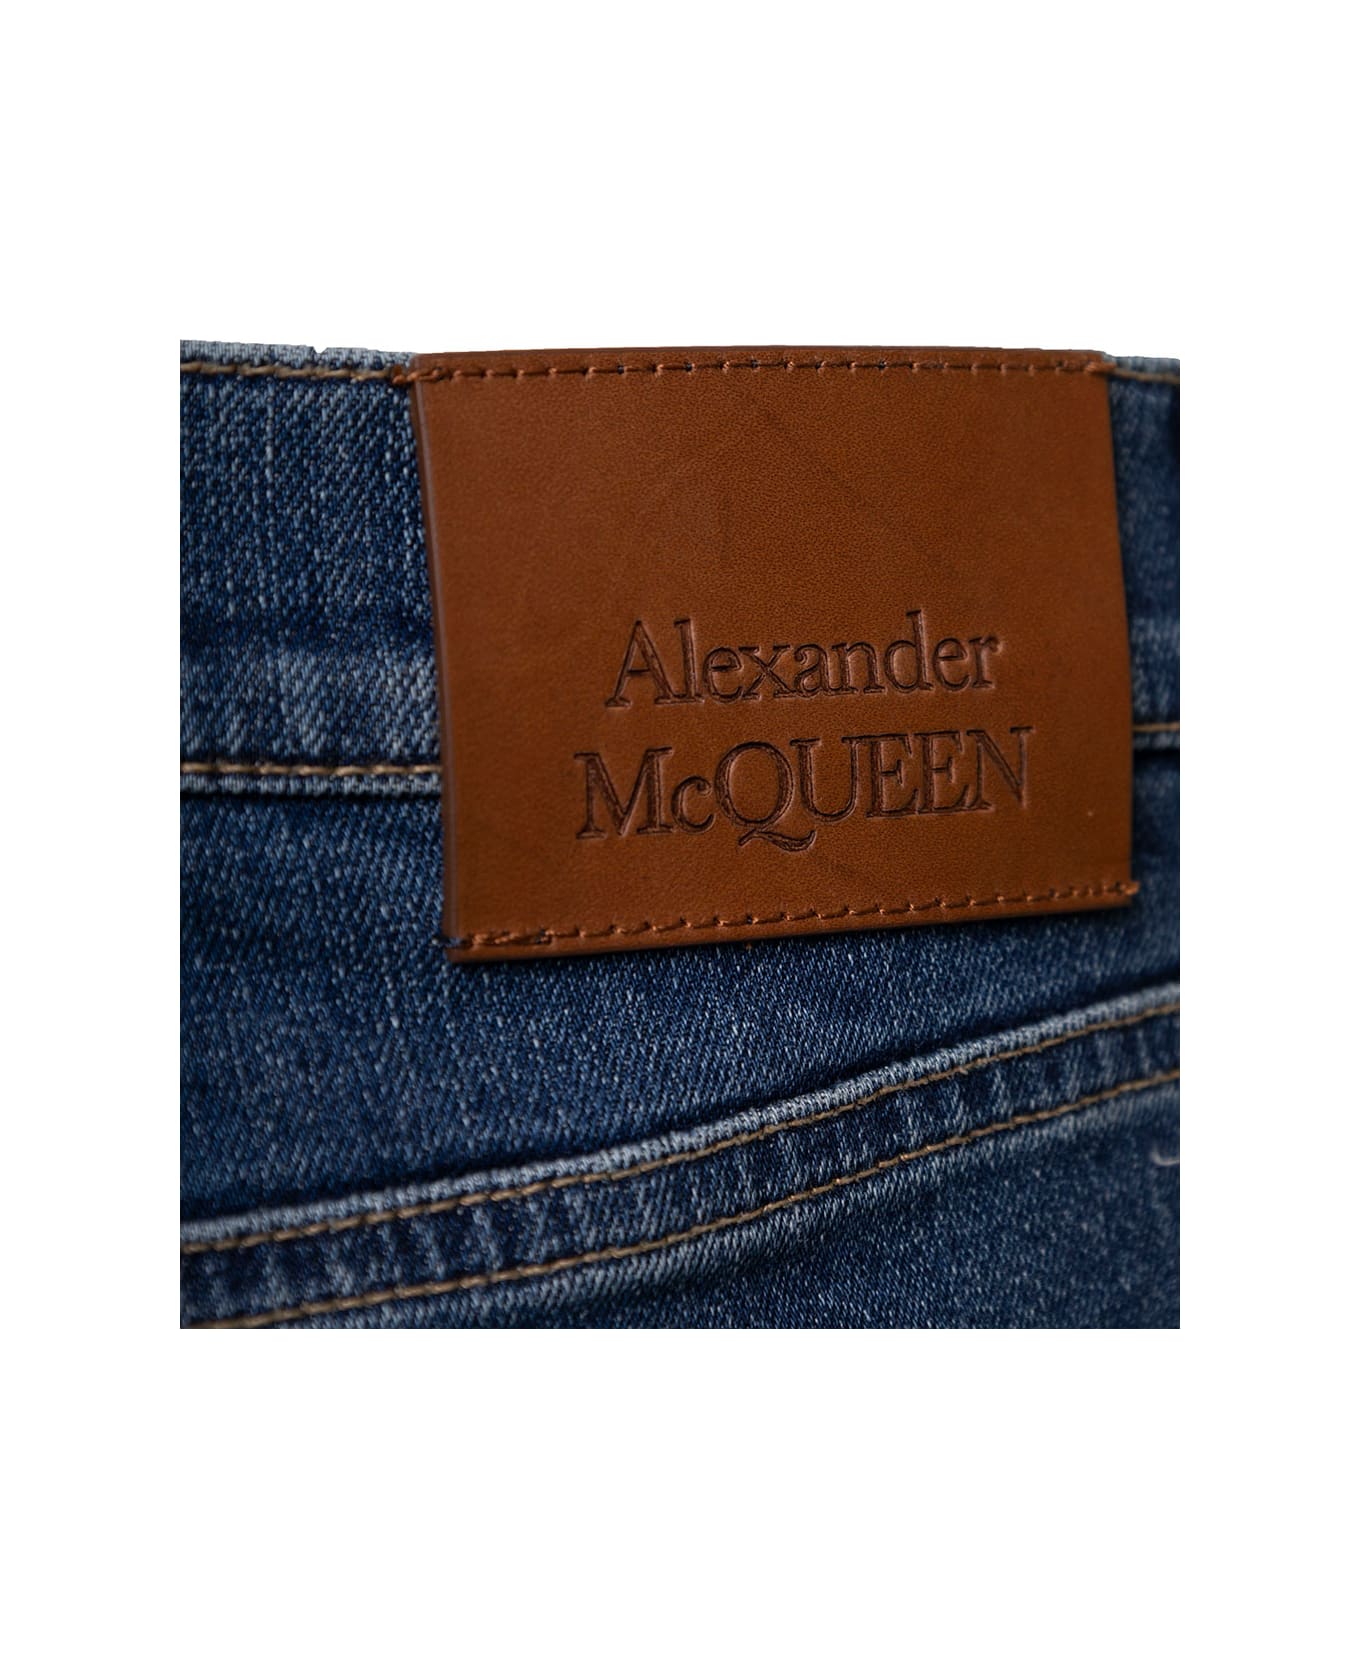 Alexander McQueen Man's Five Pockets Blue Denim Jeans With Logo - BLUE WASHED